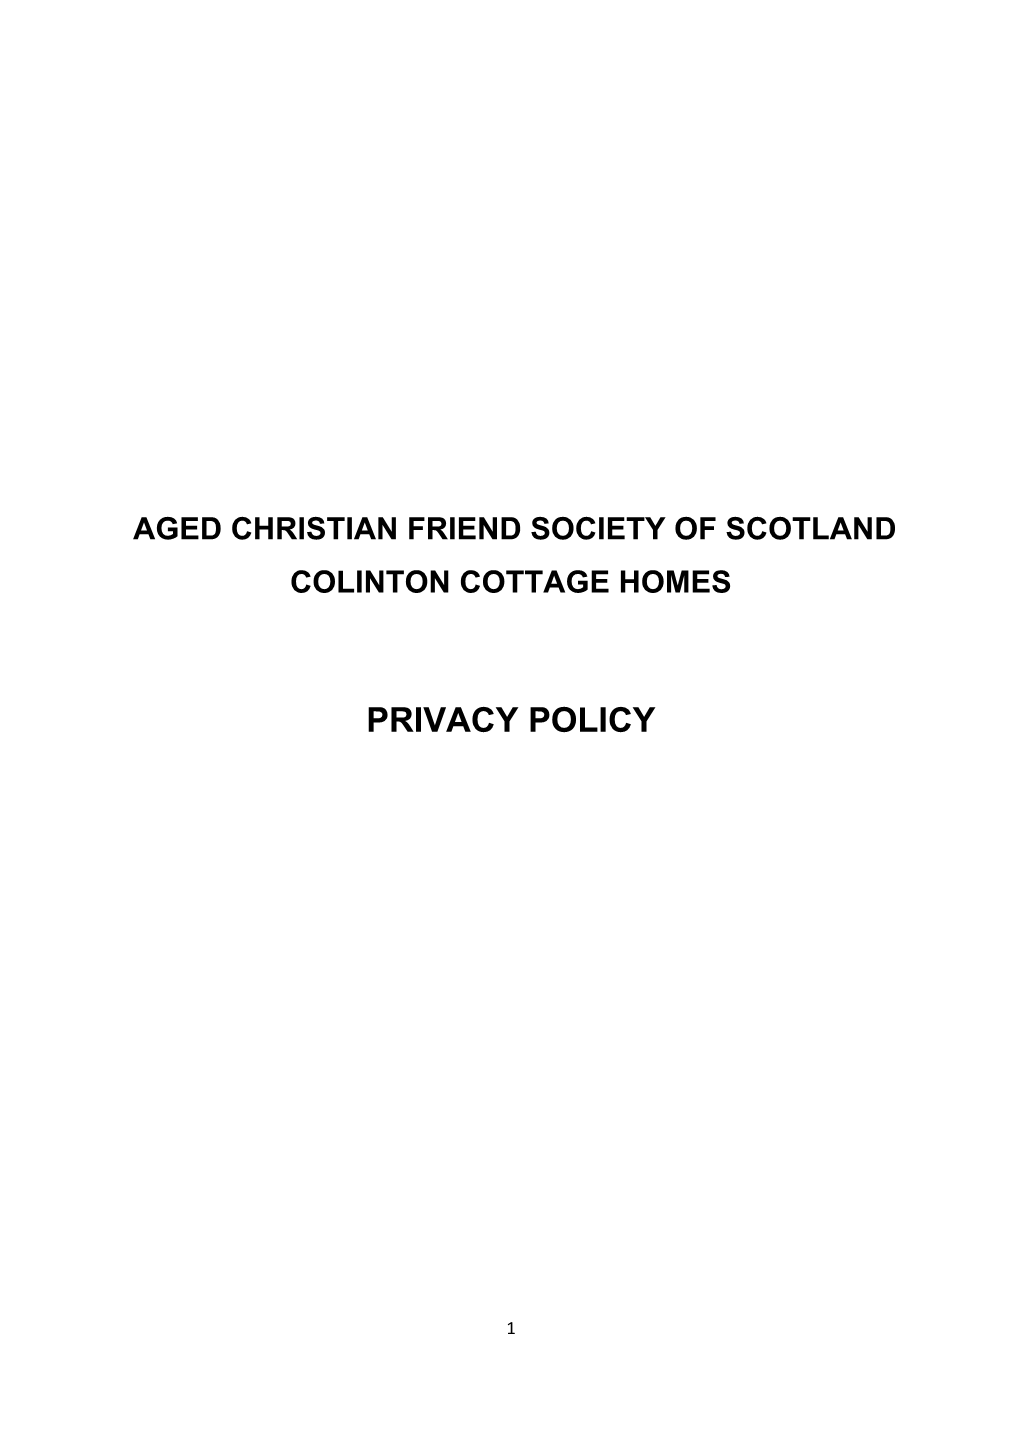 Aged Christian Friend Society of Scotland